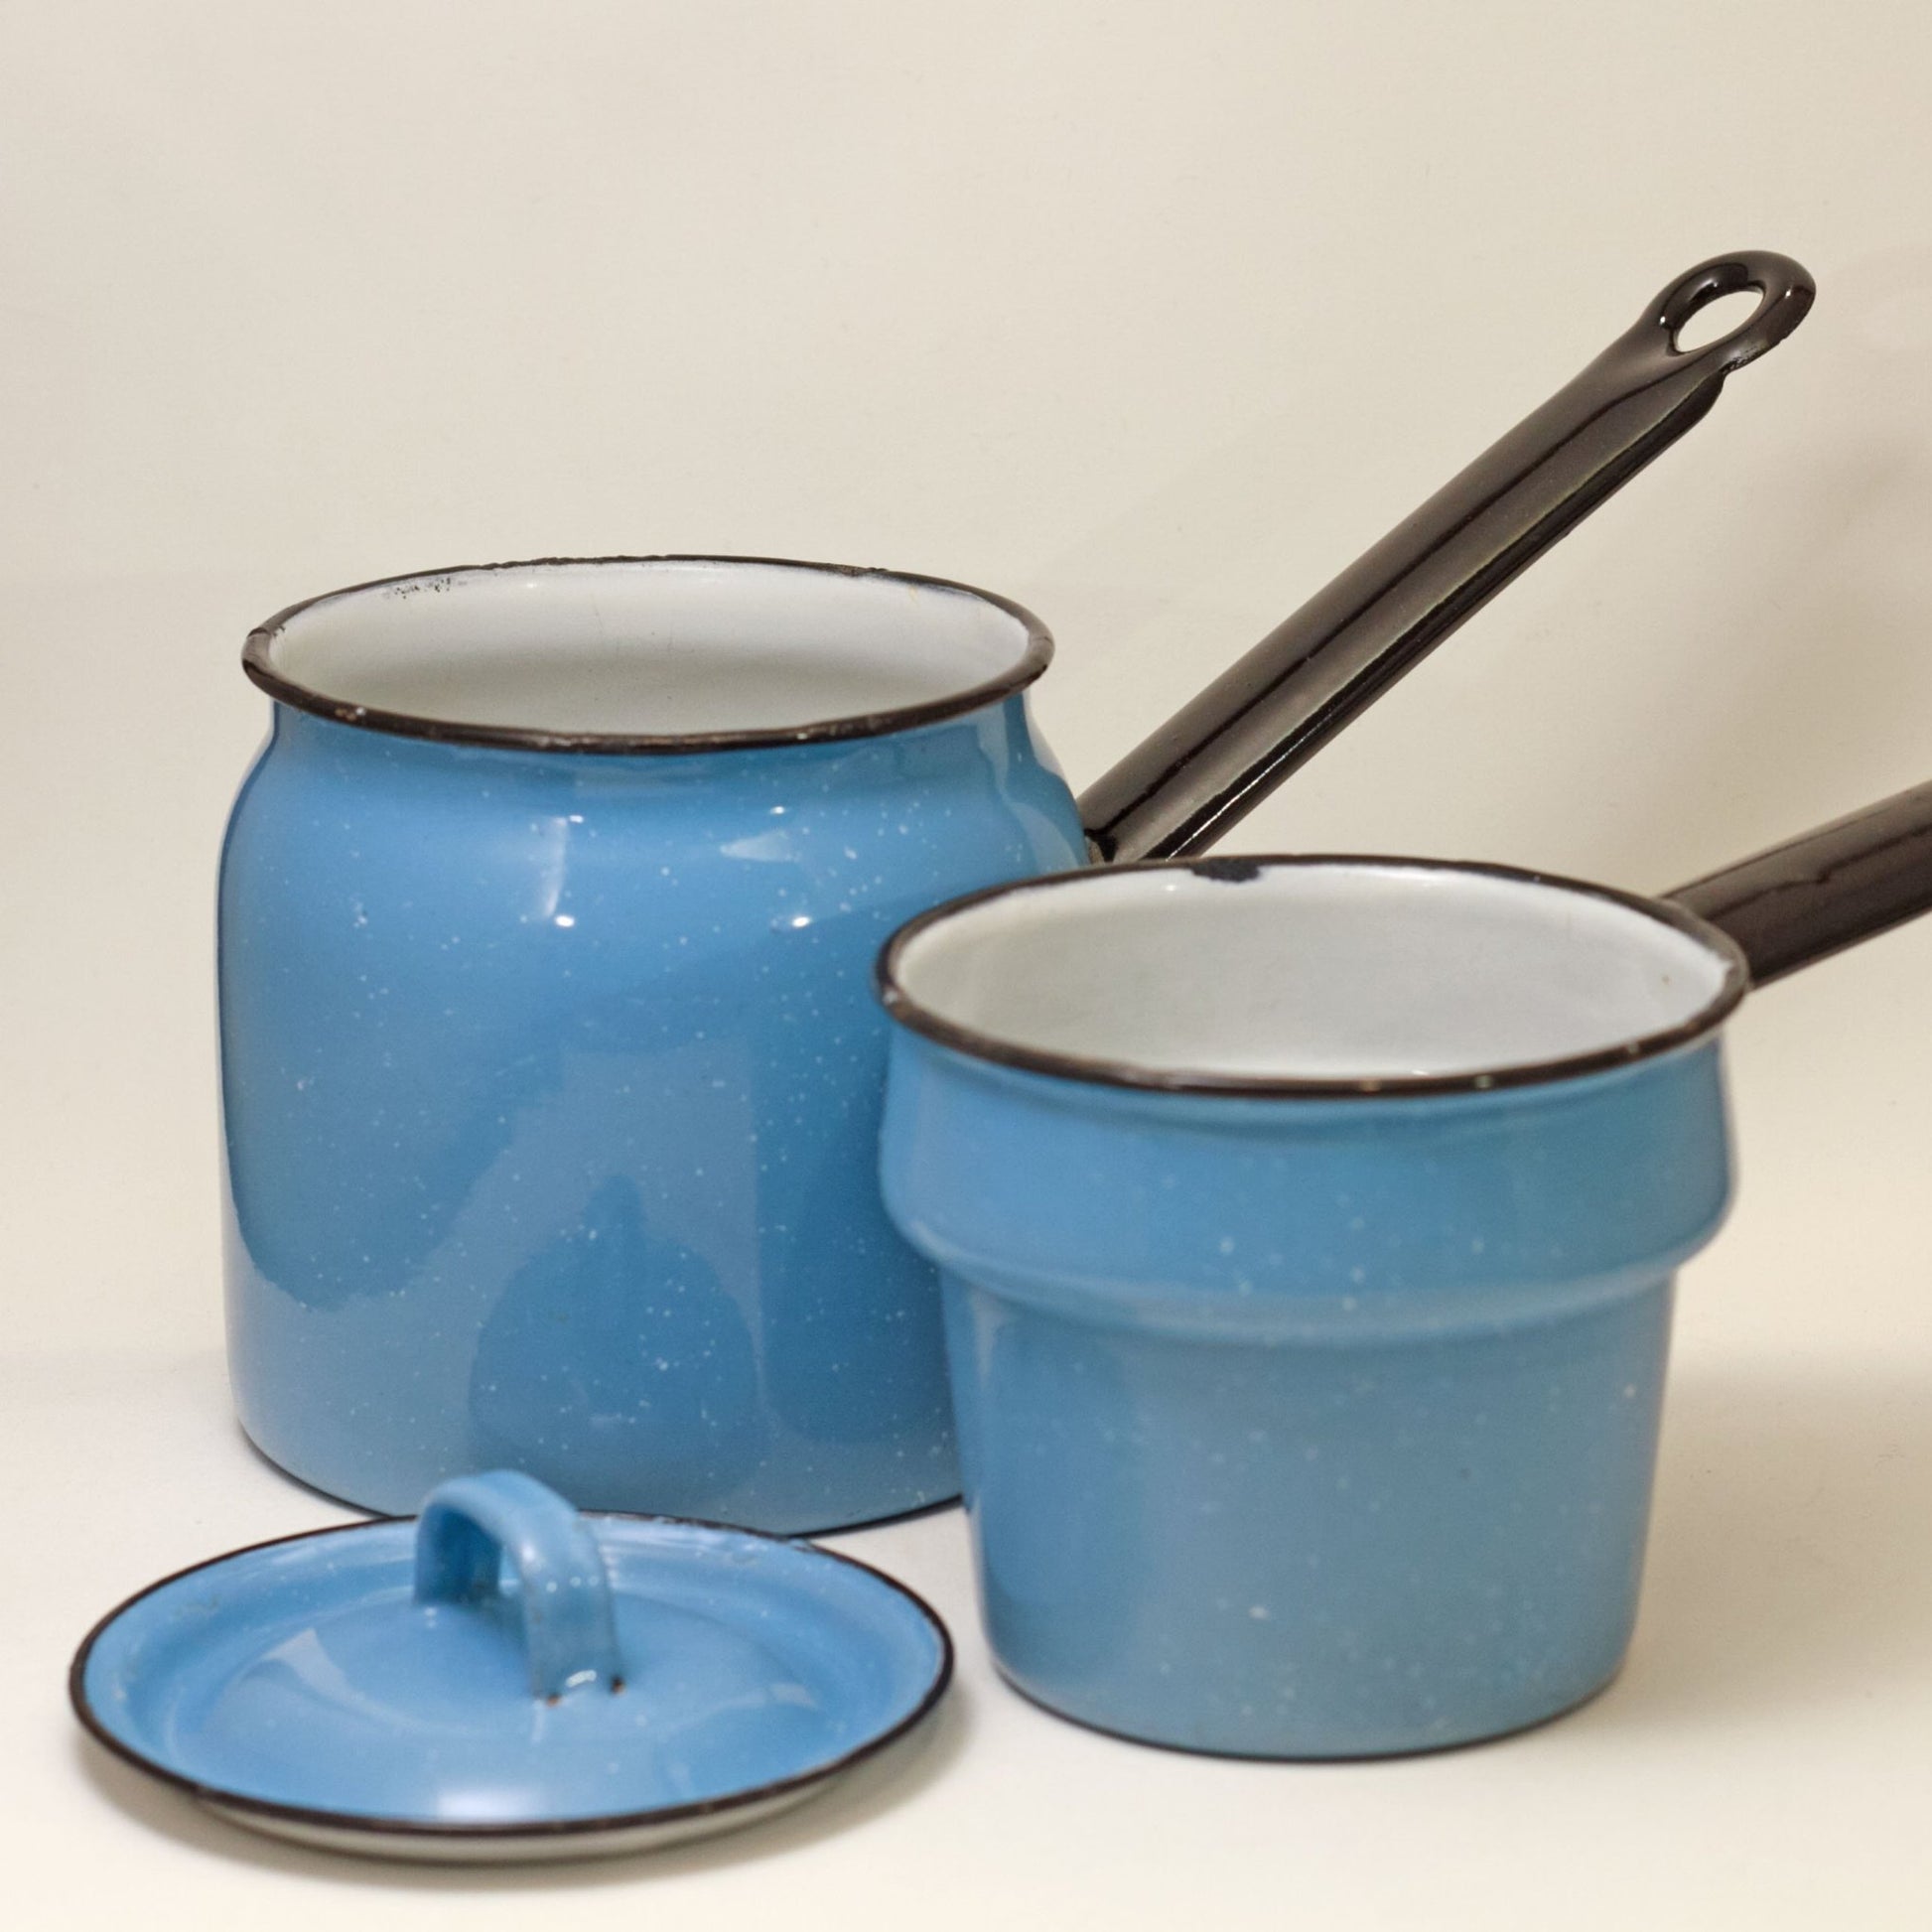 Set of 2 VTG Round Enamel Pots Pan Set Turquoise Blue Farmhouse